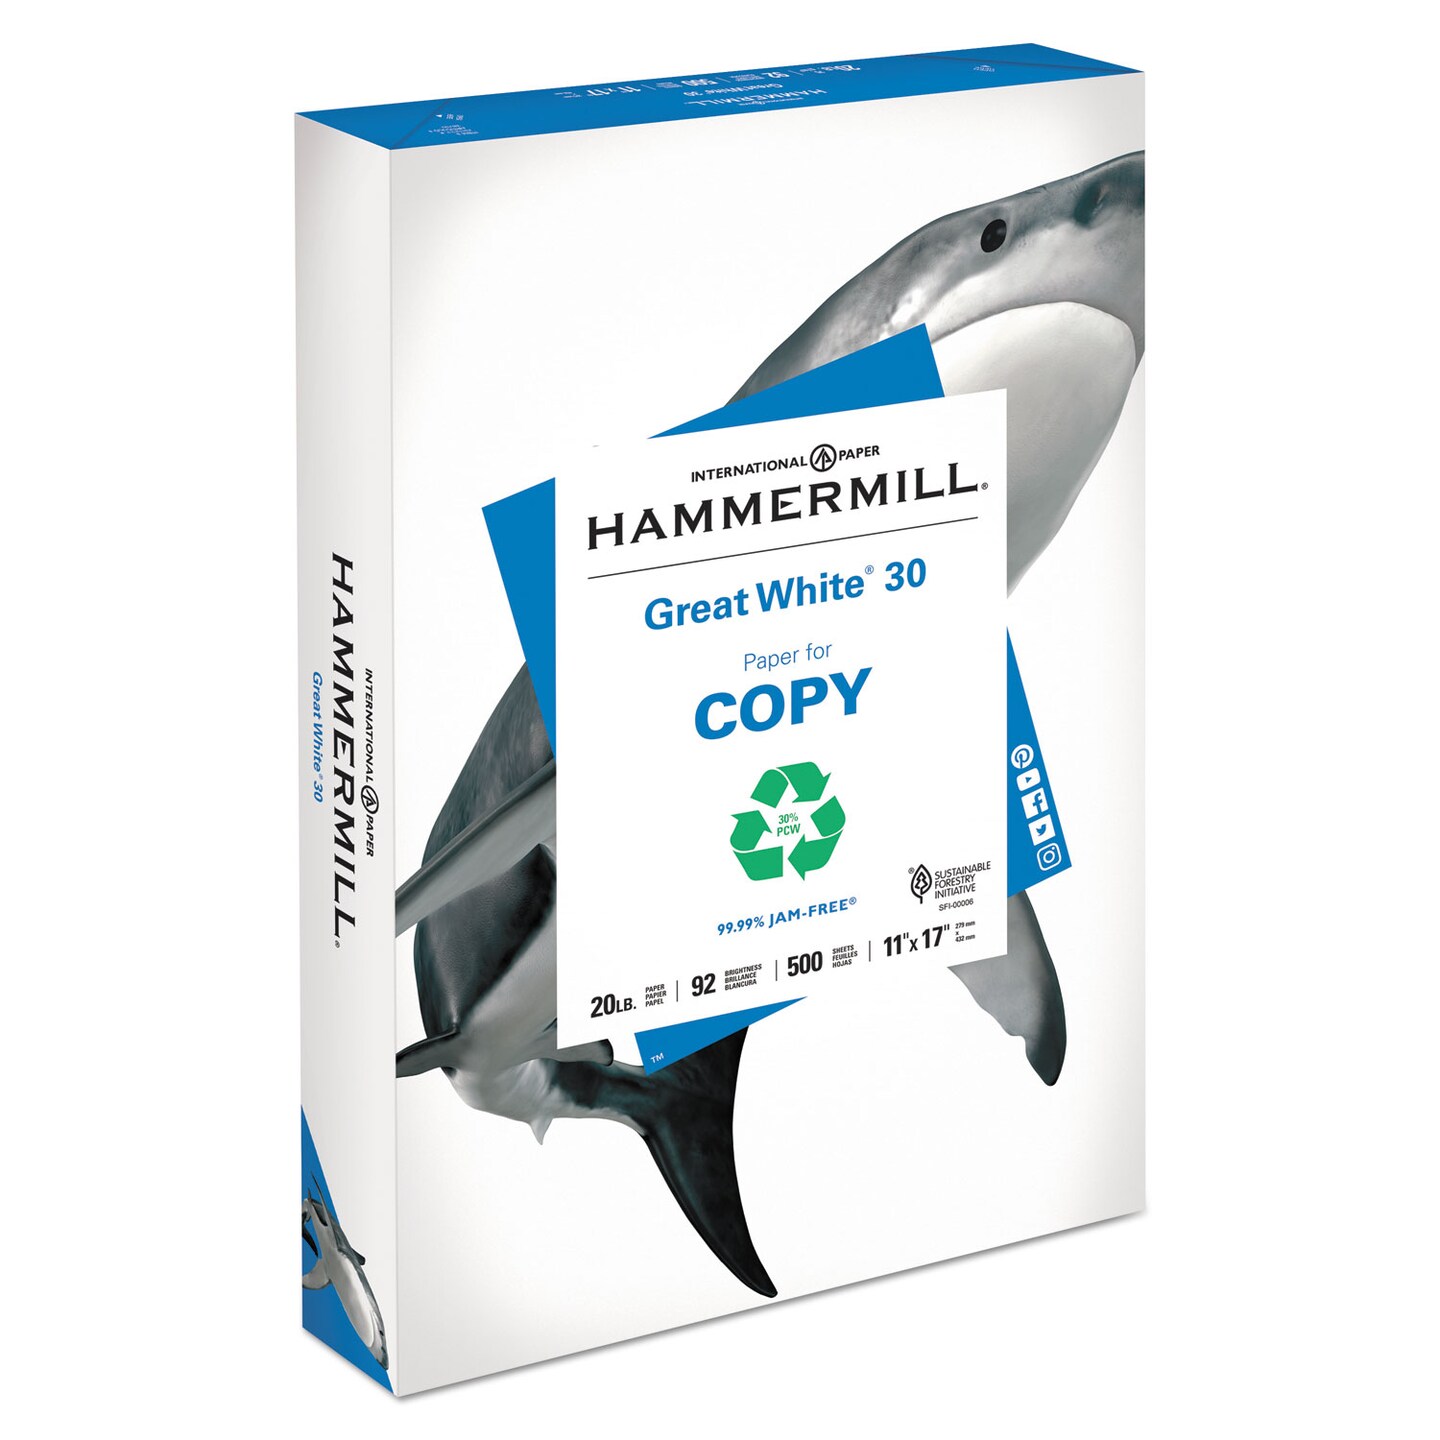 Hammermill Printer Paper 20 LB - Search Shopping